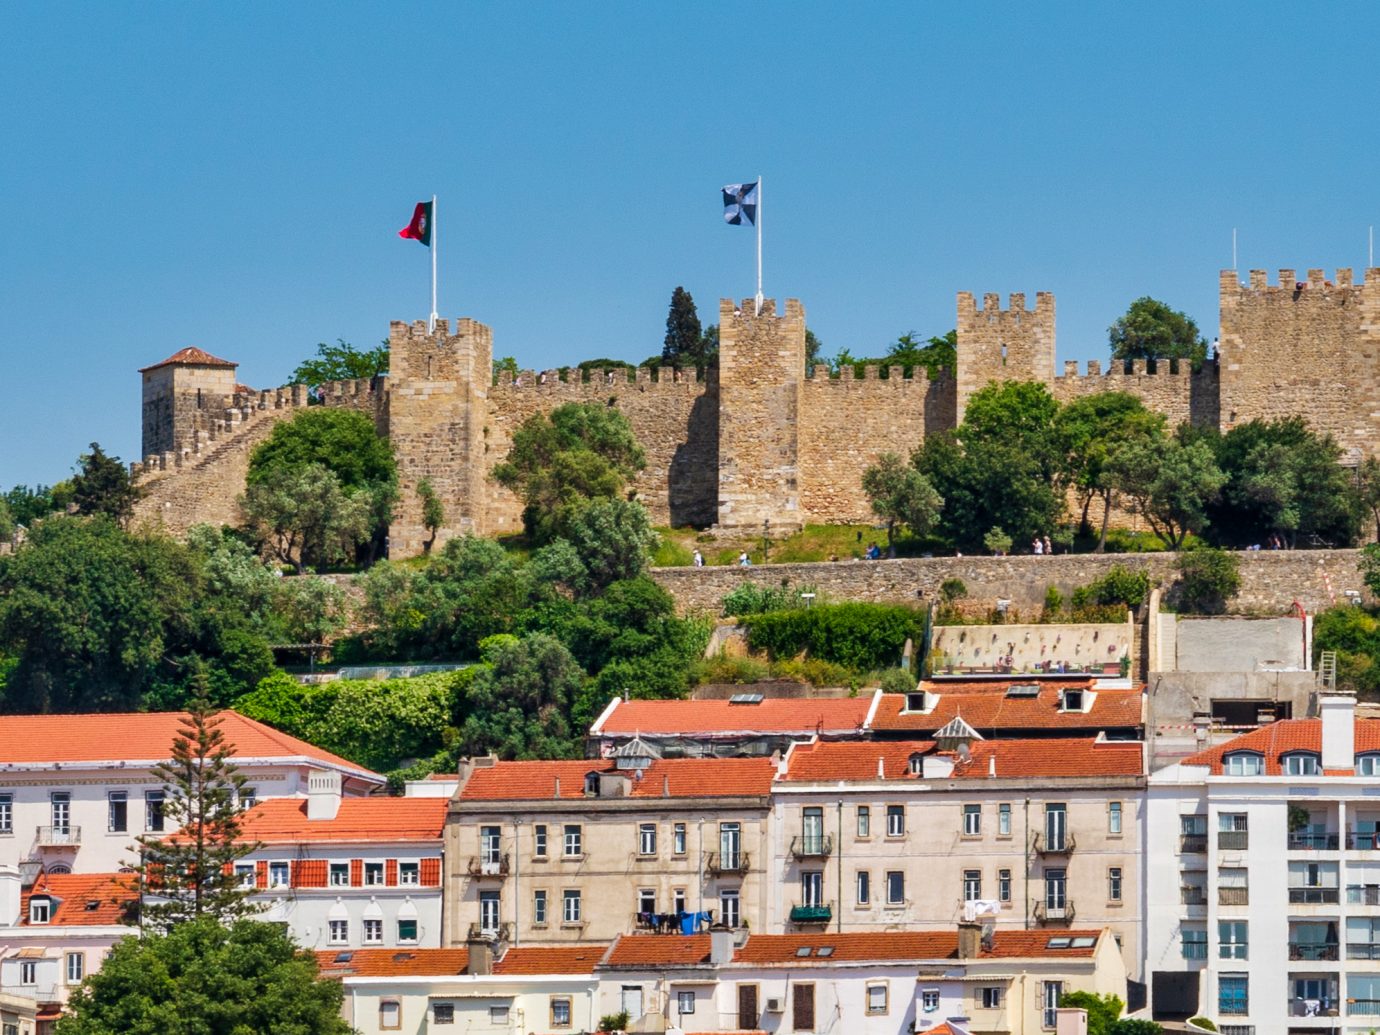 Castelo de Sao Jorge in Lisbon, Portugal